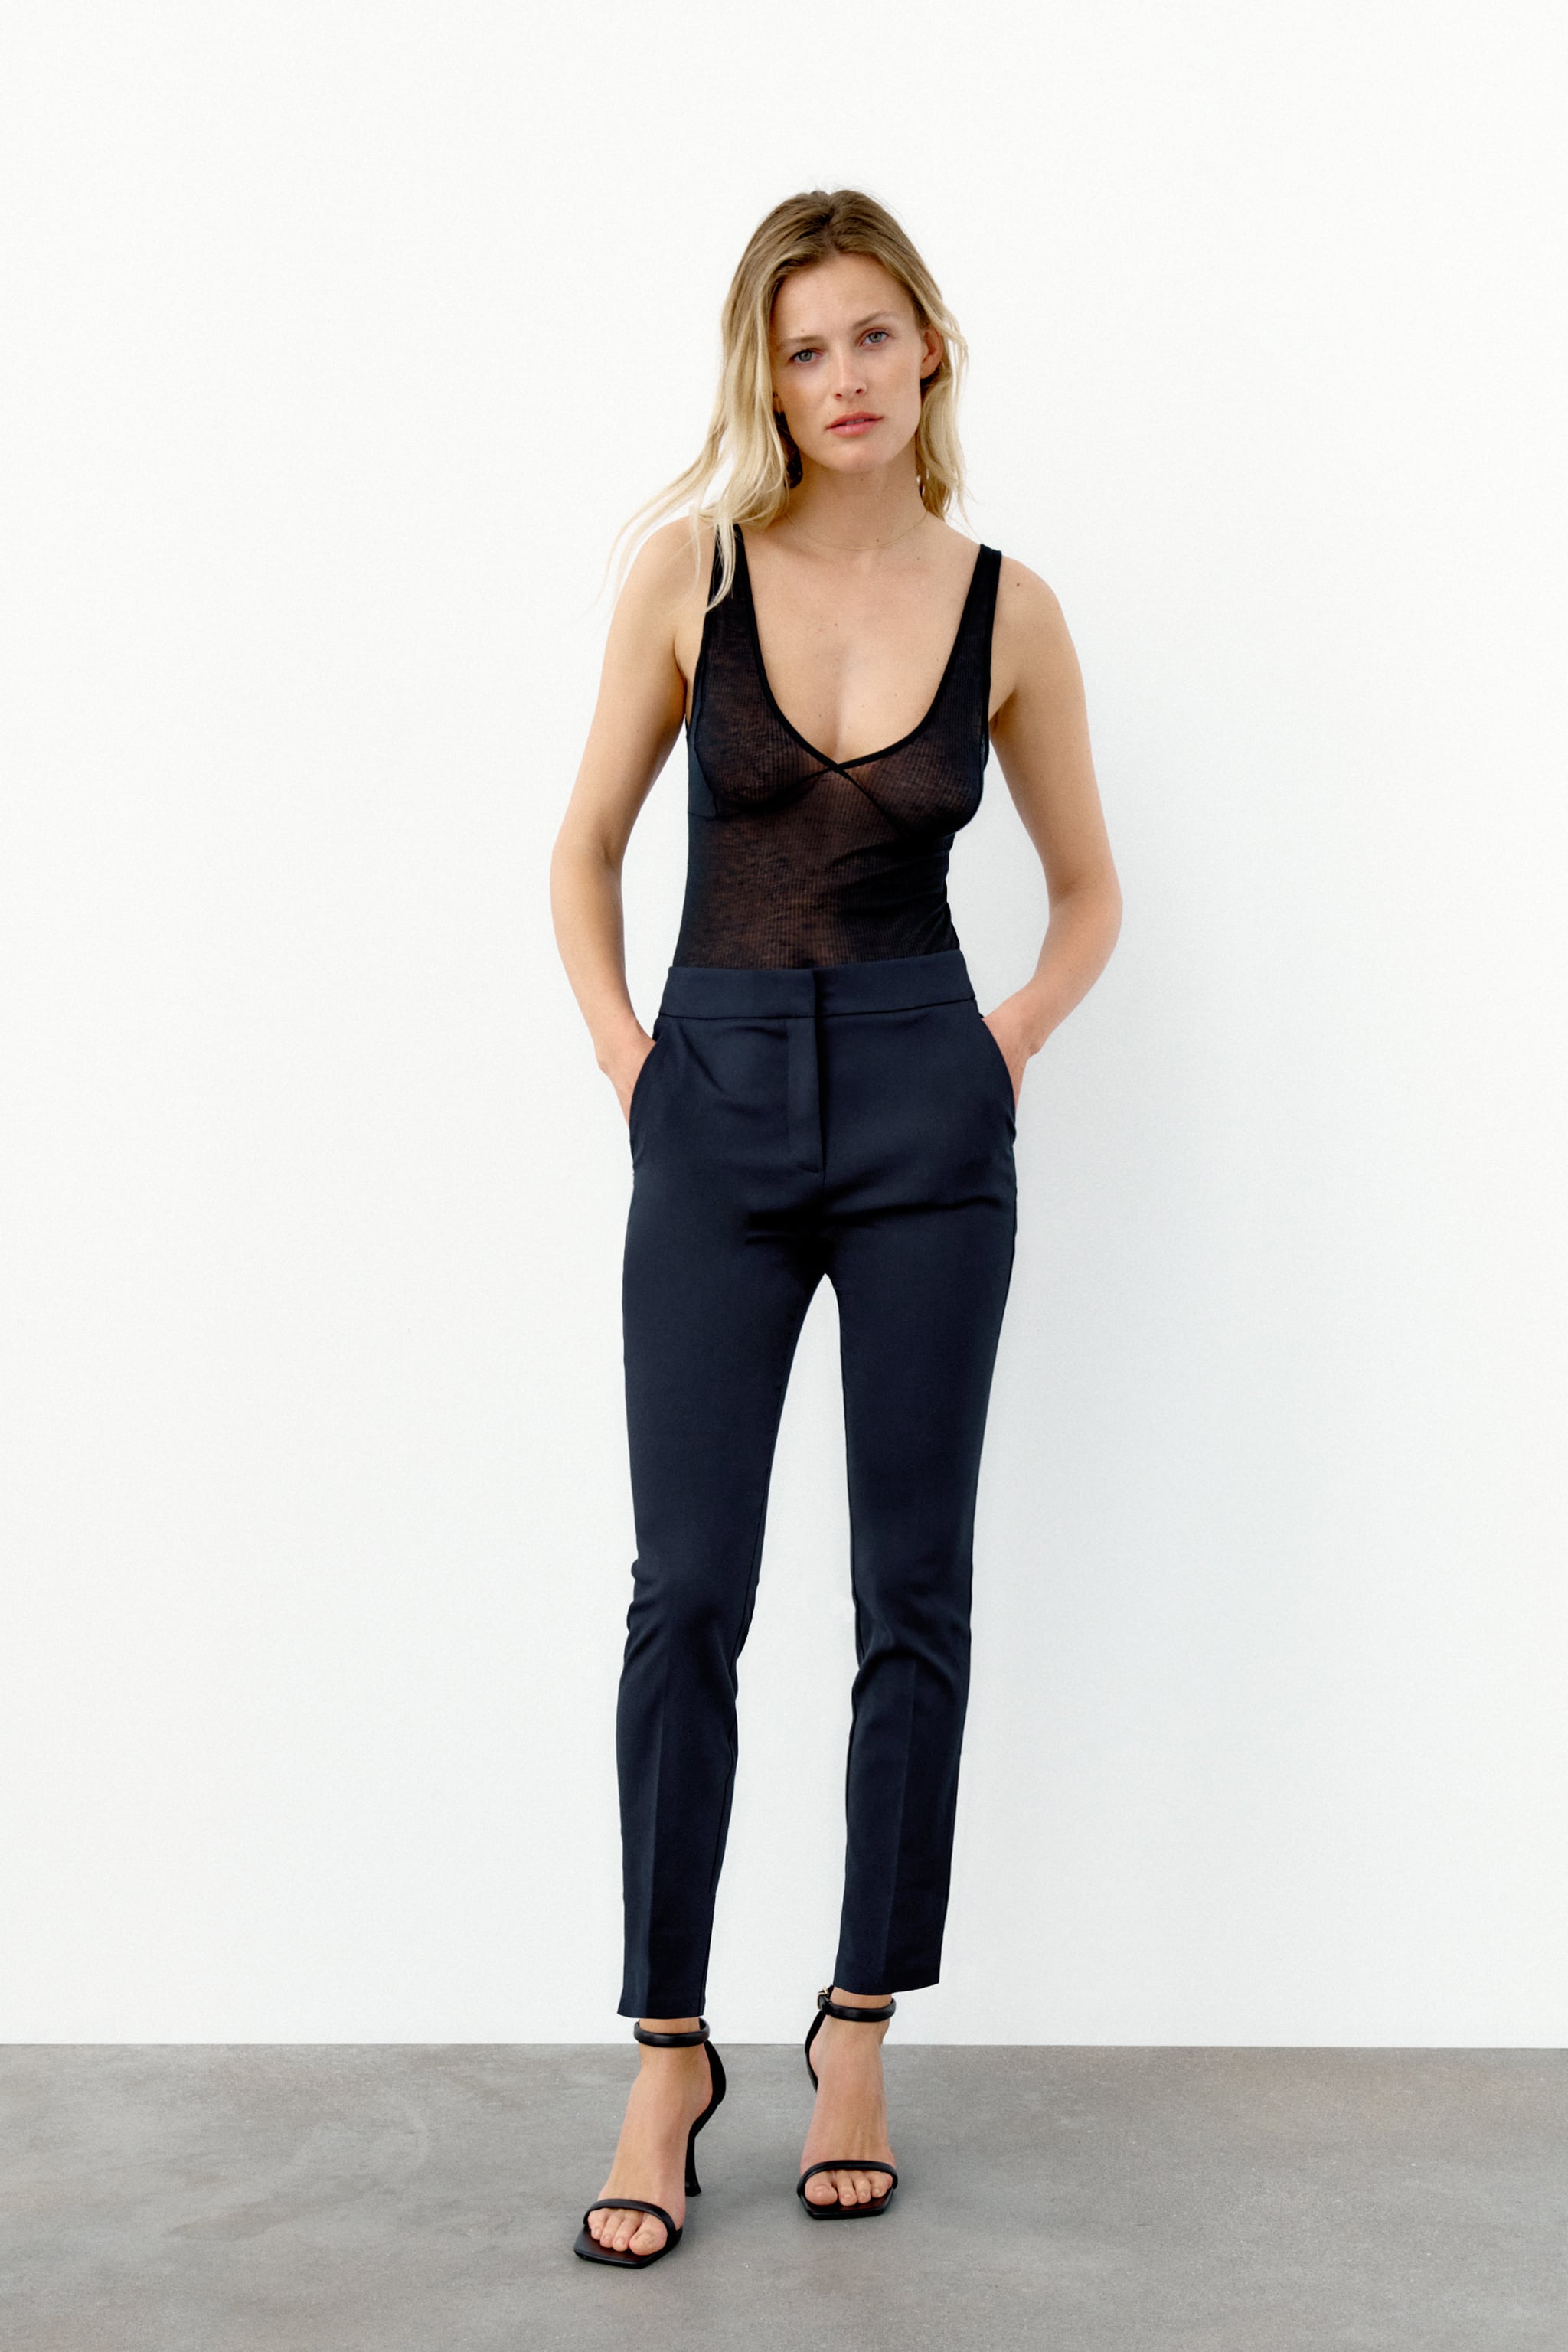 Zara elastic waist pants